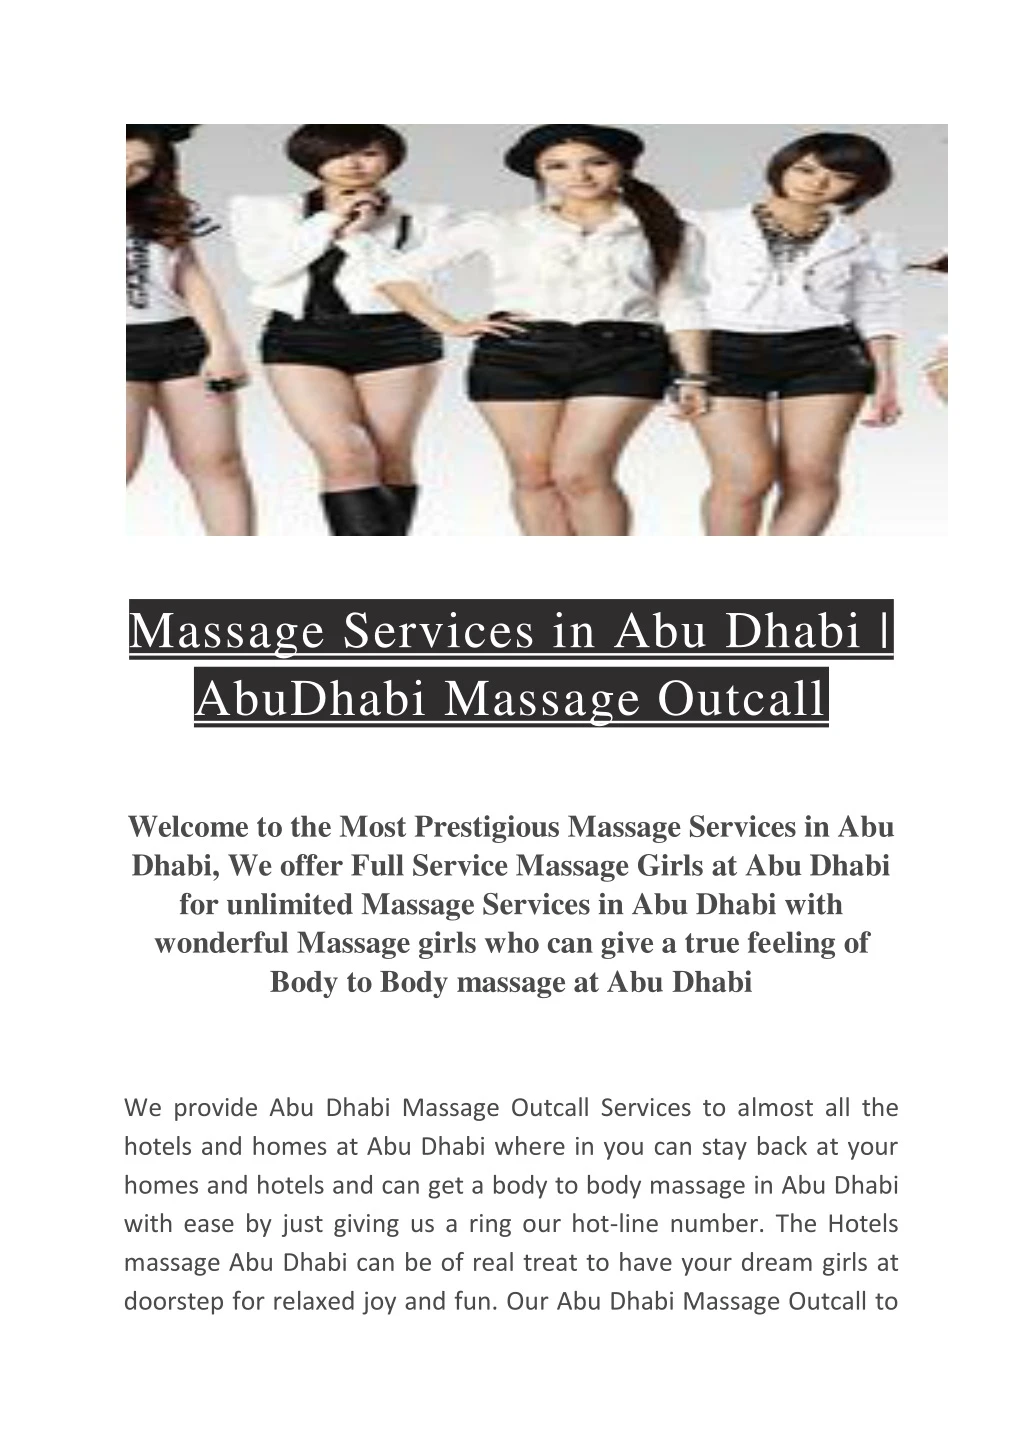 massage services in abu dhabi abudhabi massage